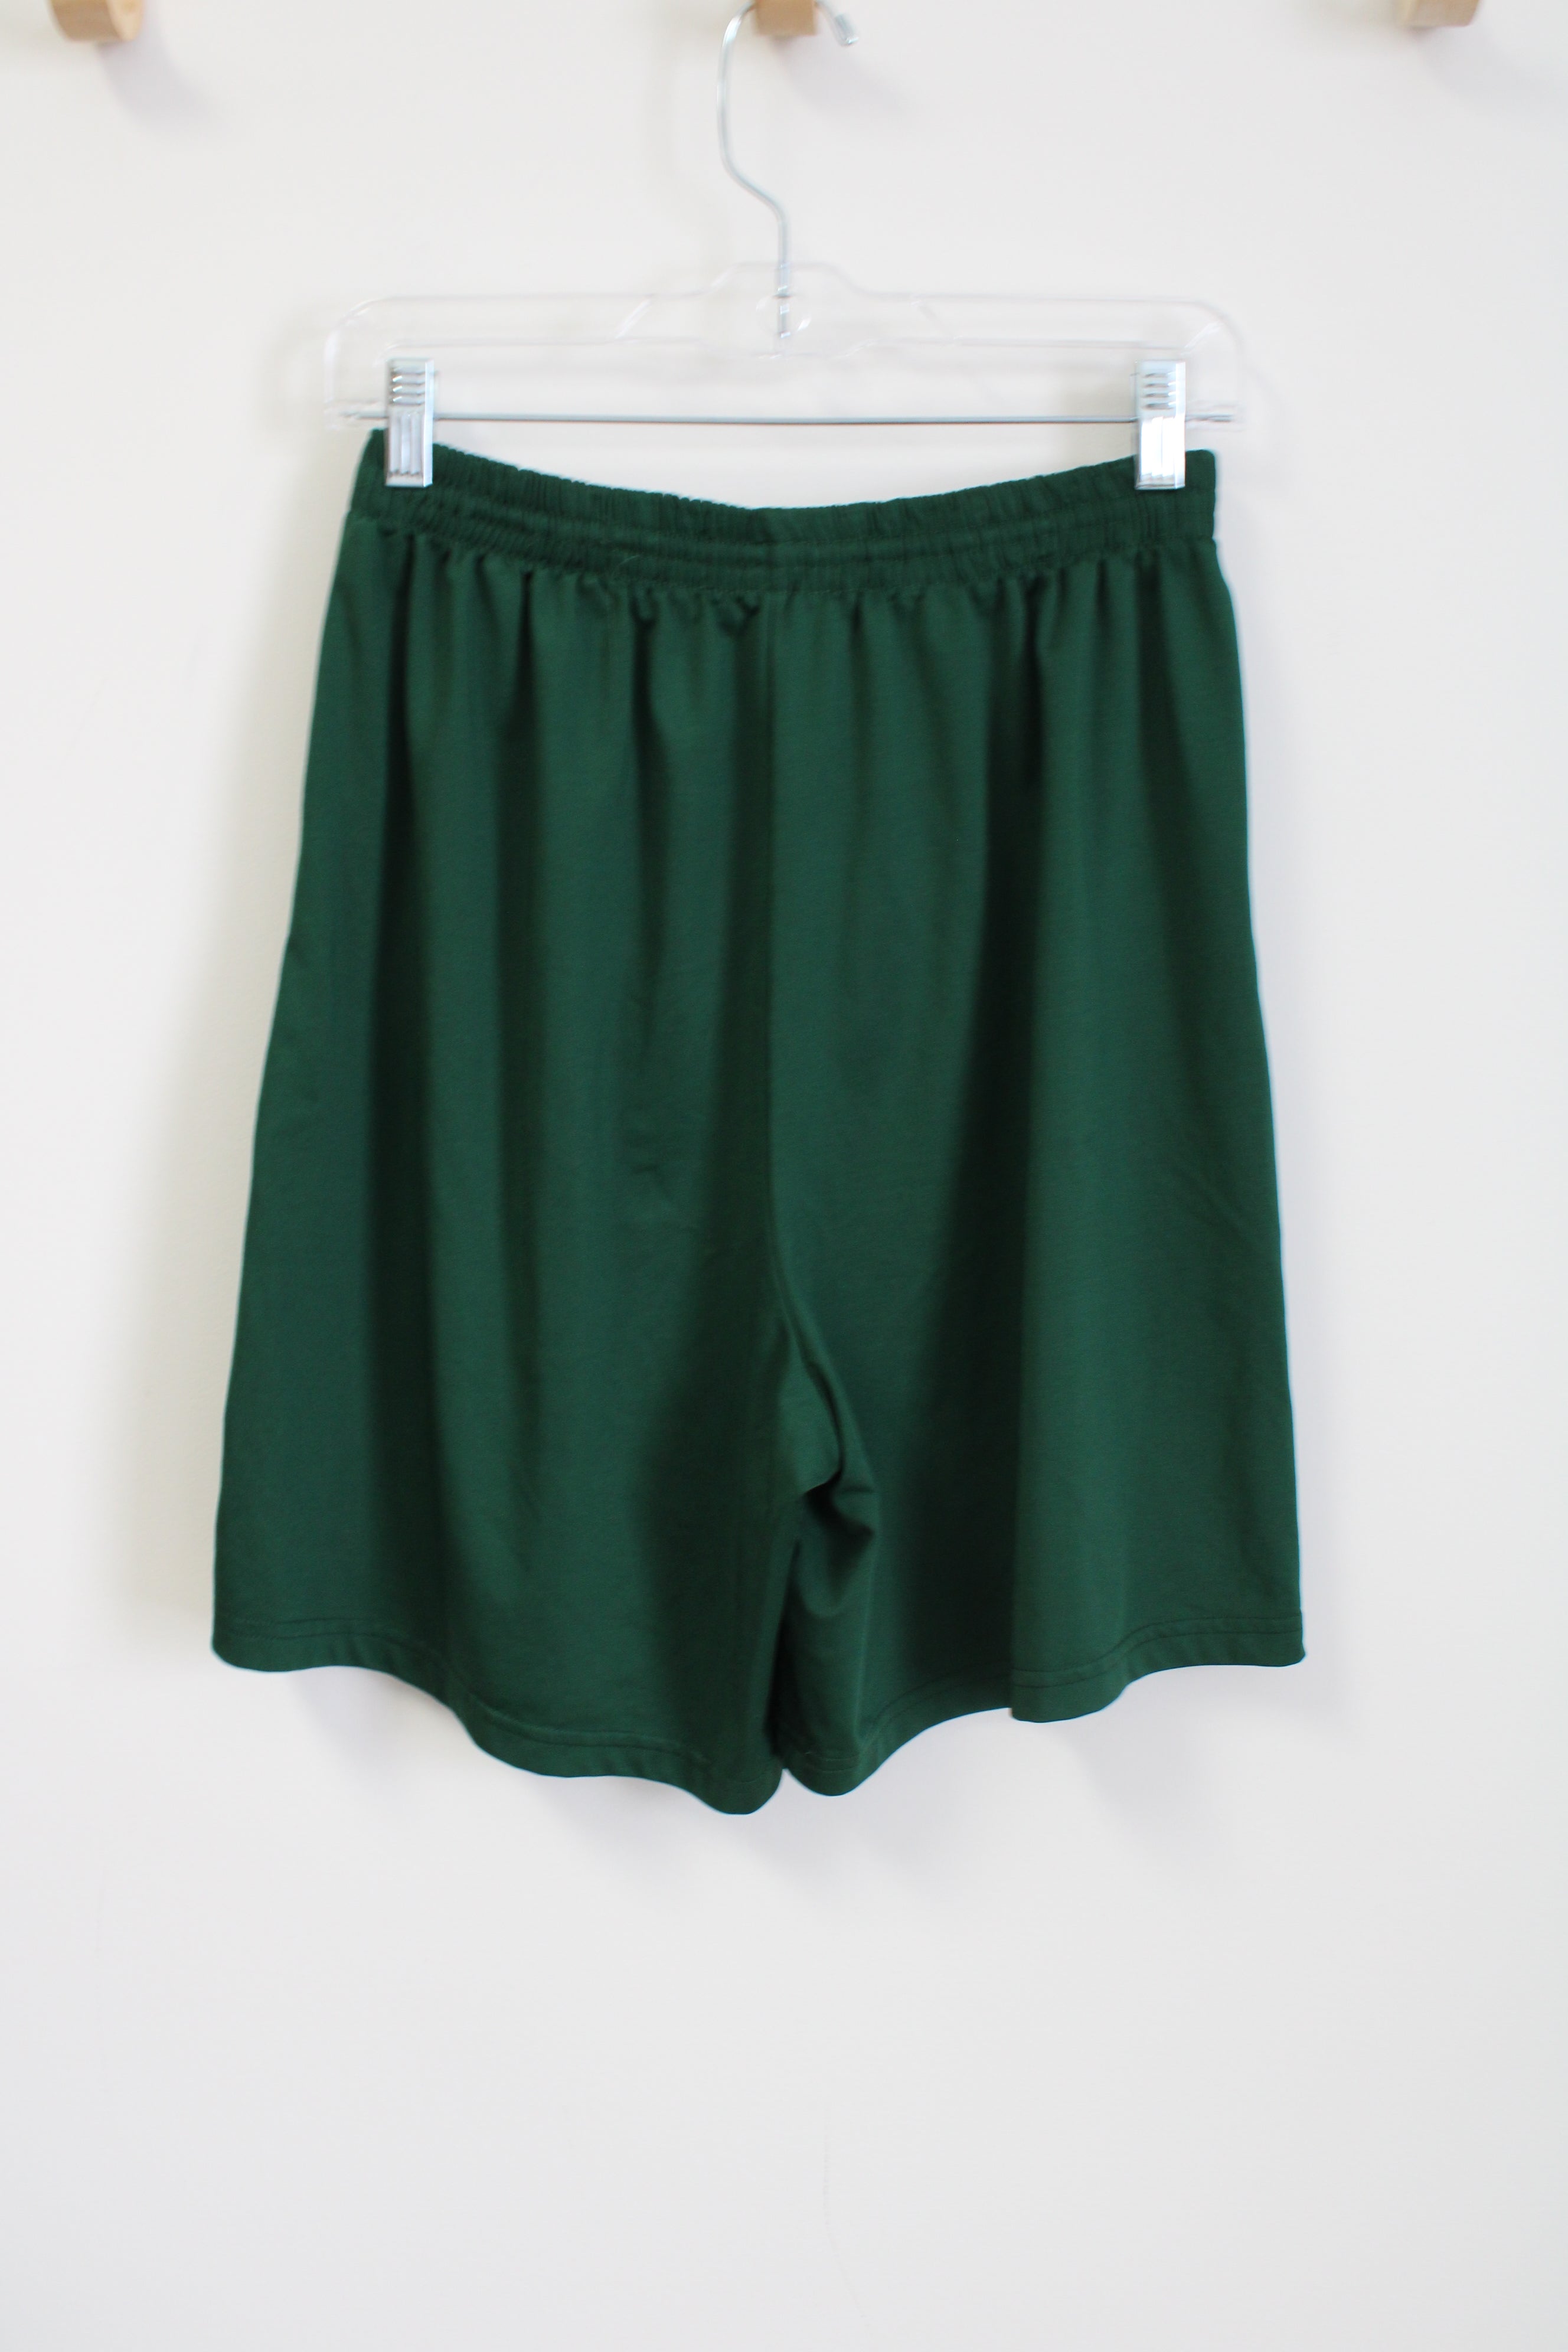 Dark Green Athletic Shorts | M